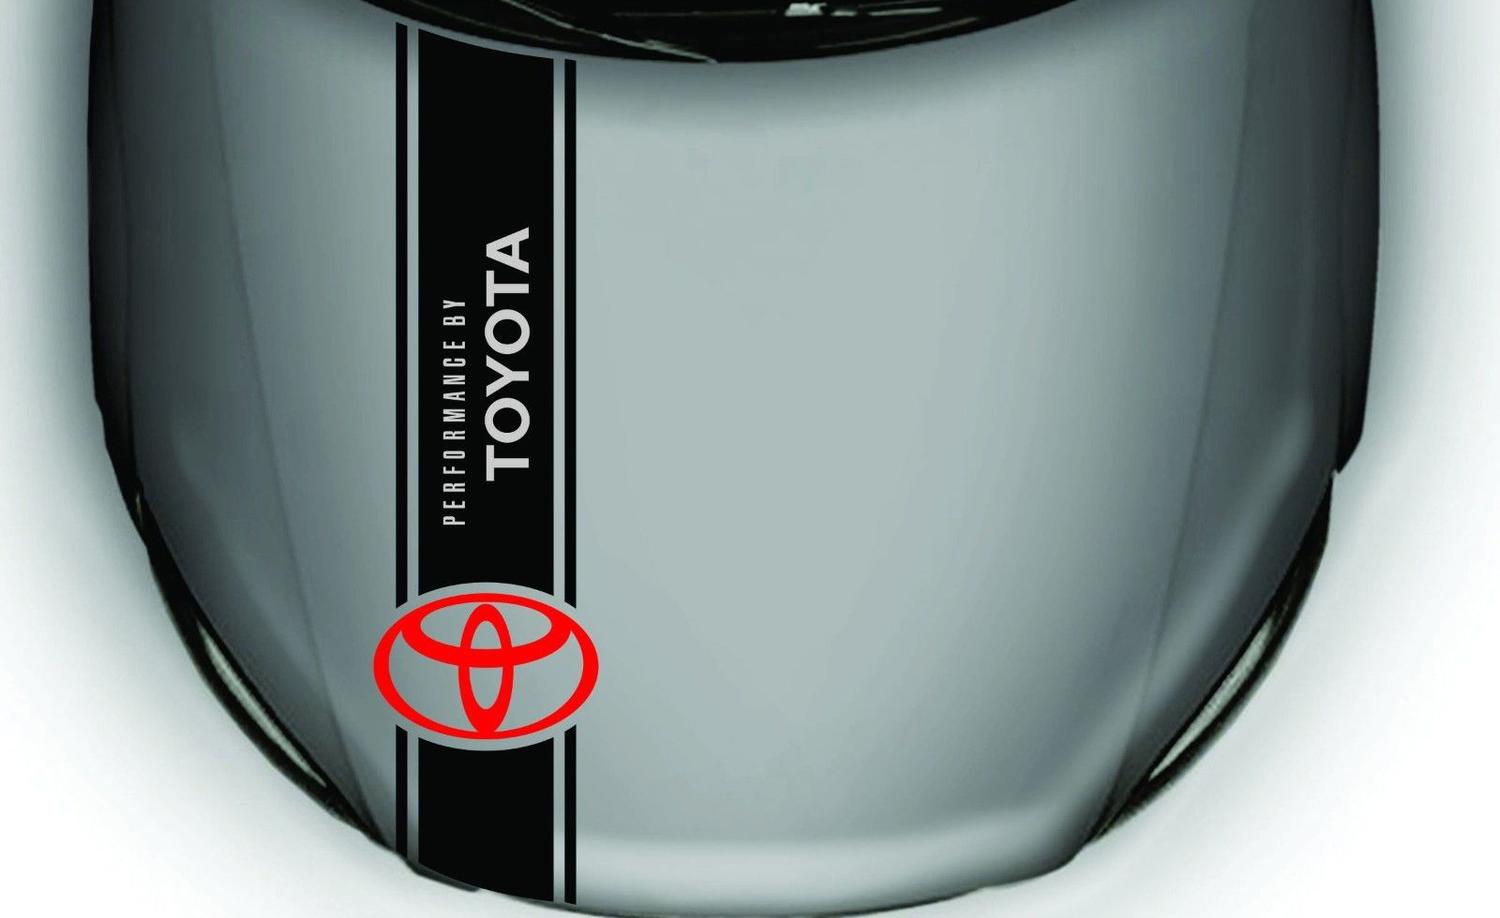 Hood vinyle autocollant décalque pour Toyota Camry Corolla Yaris Matrix Tundra Rav 4 Runner Tacoma